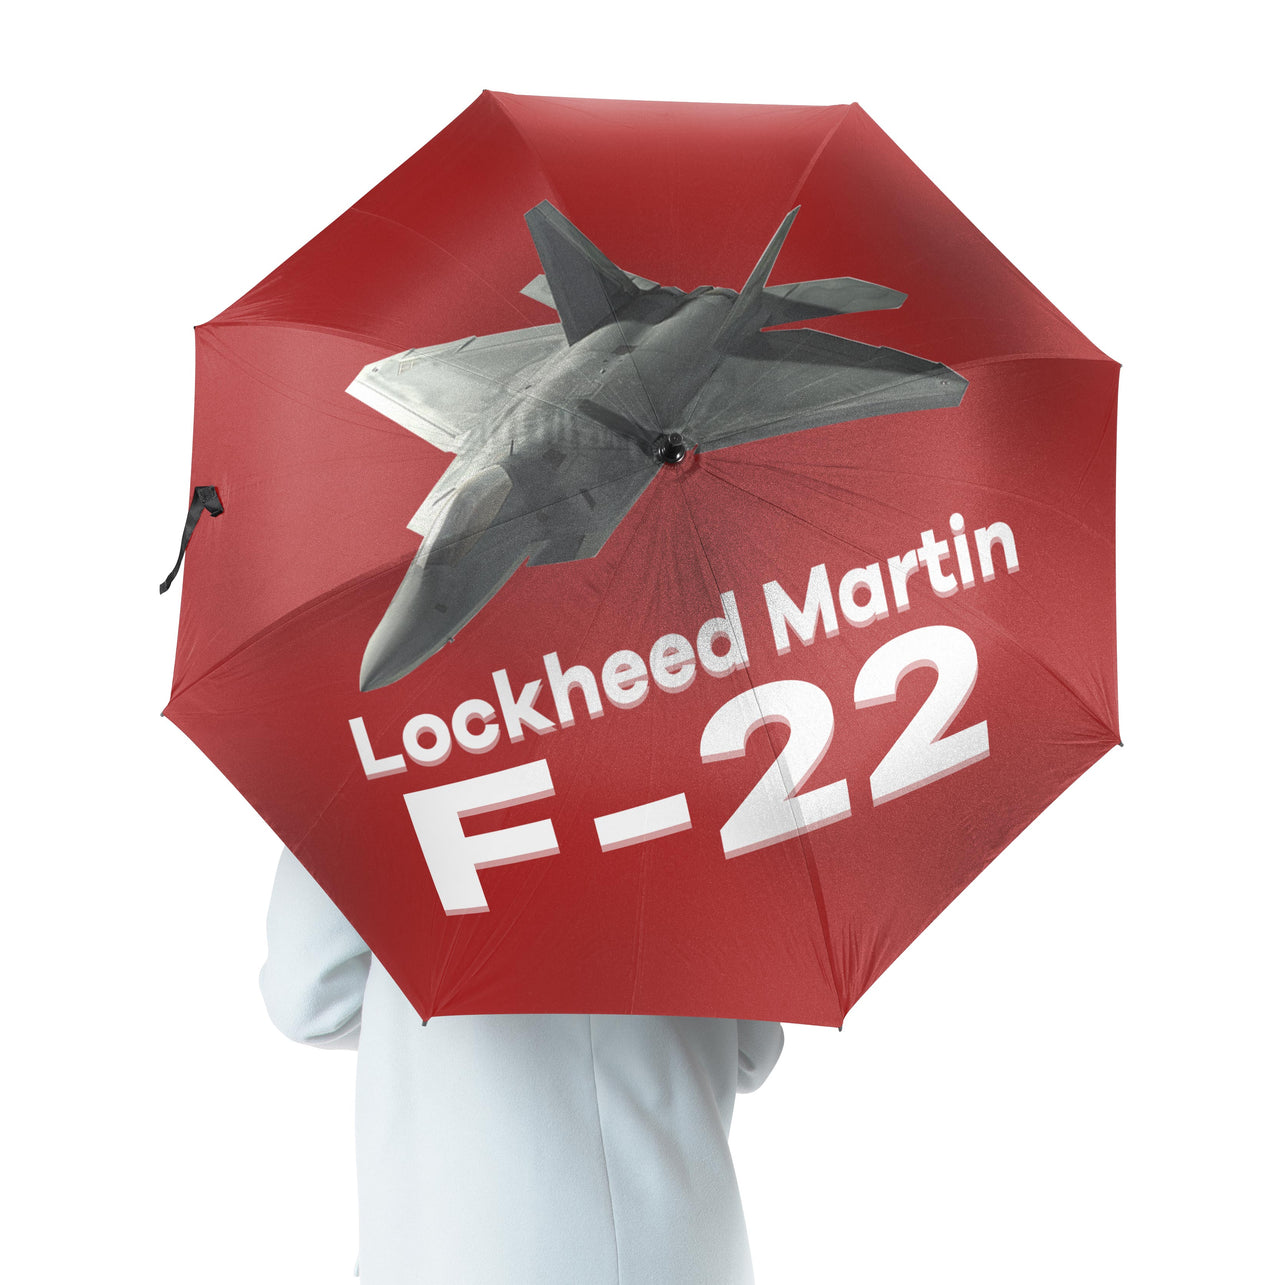 The Lockheed Martin F22 Designed Umbrella